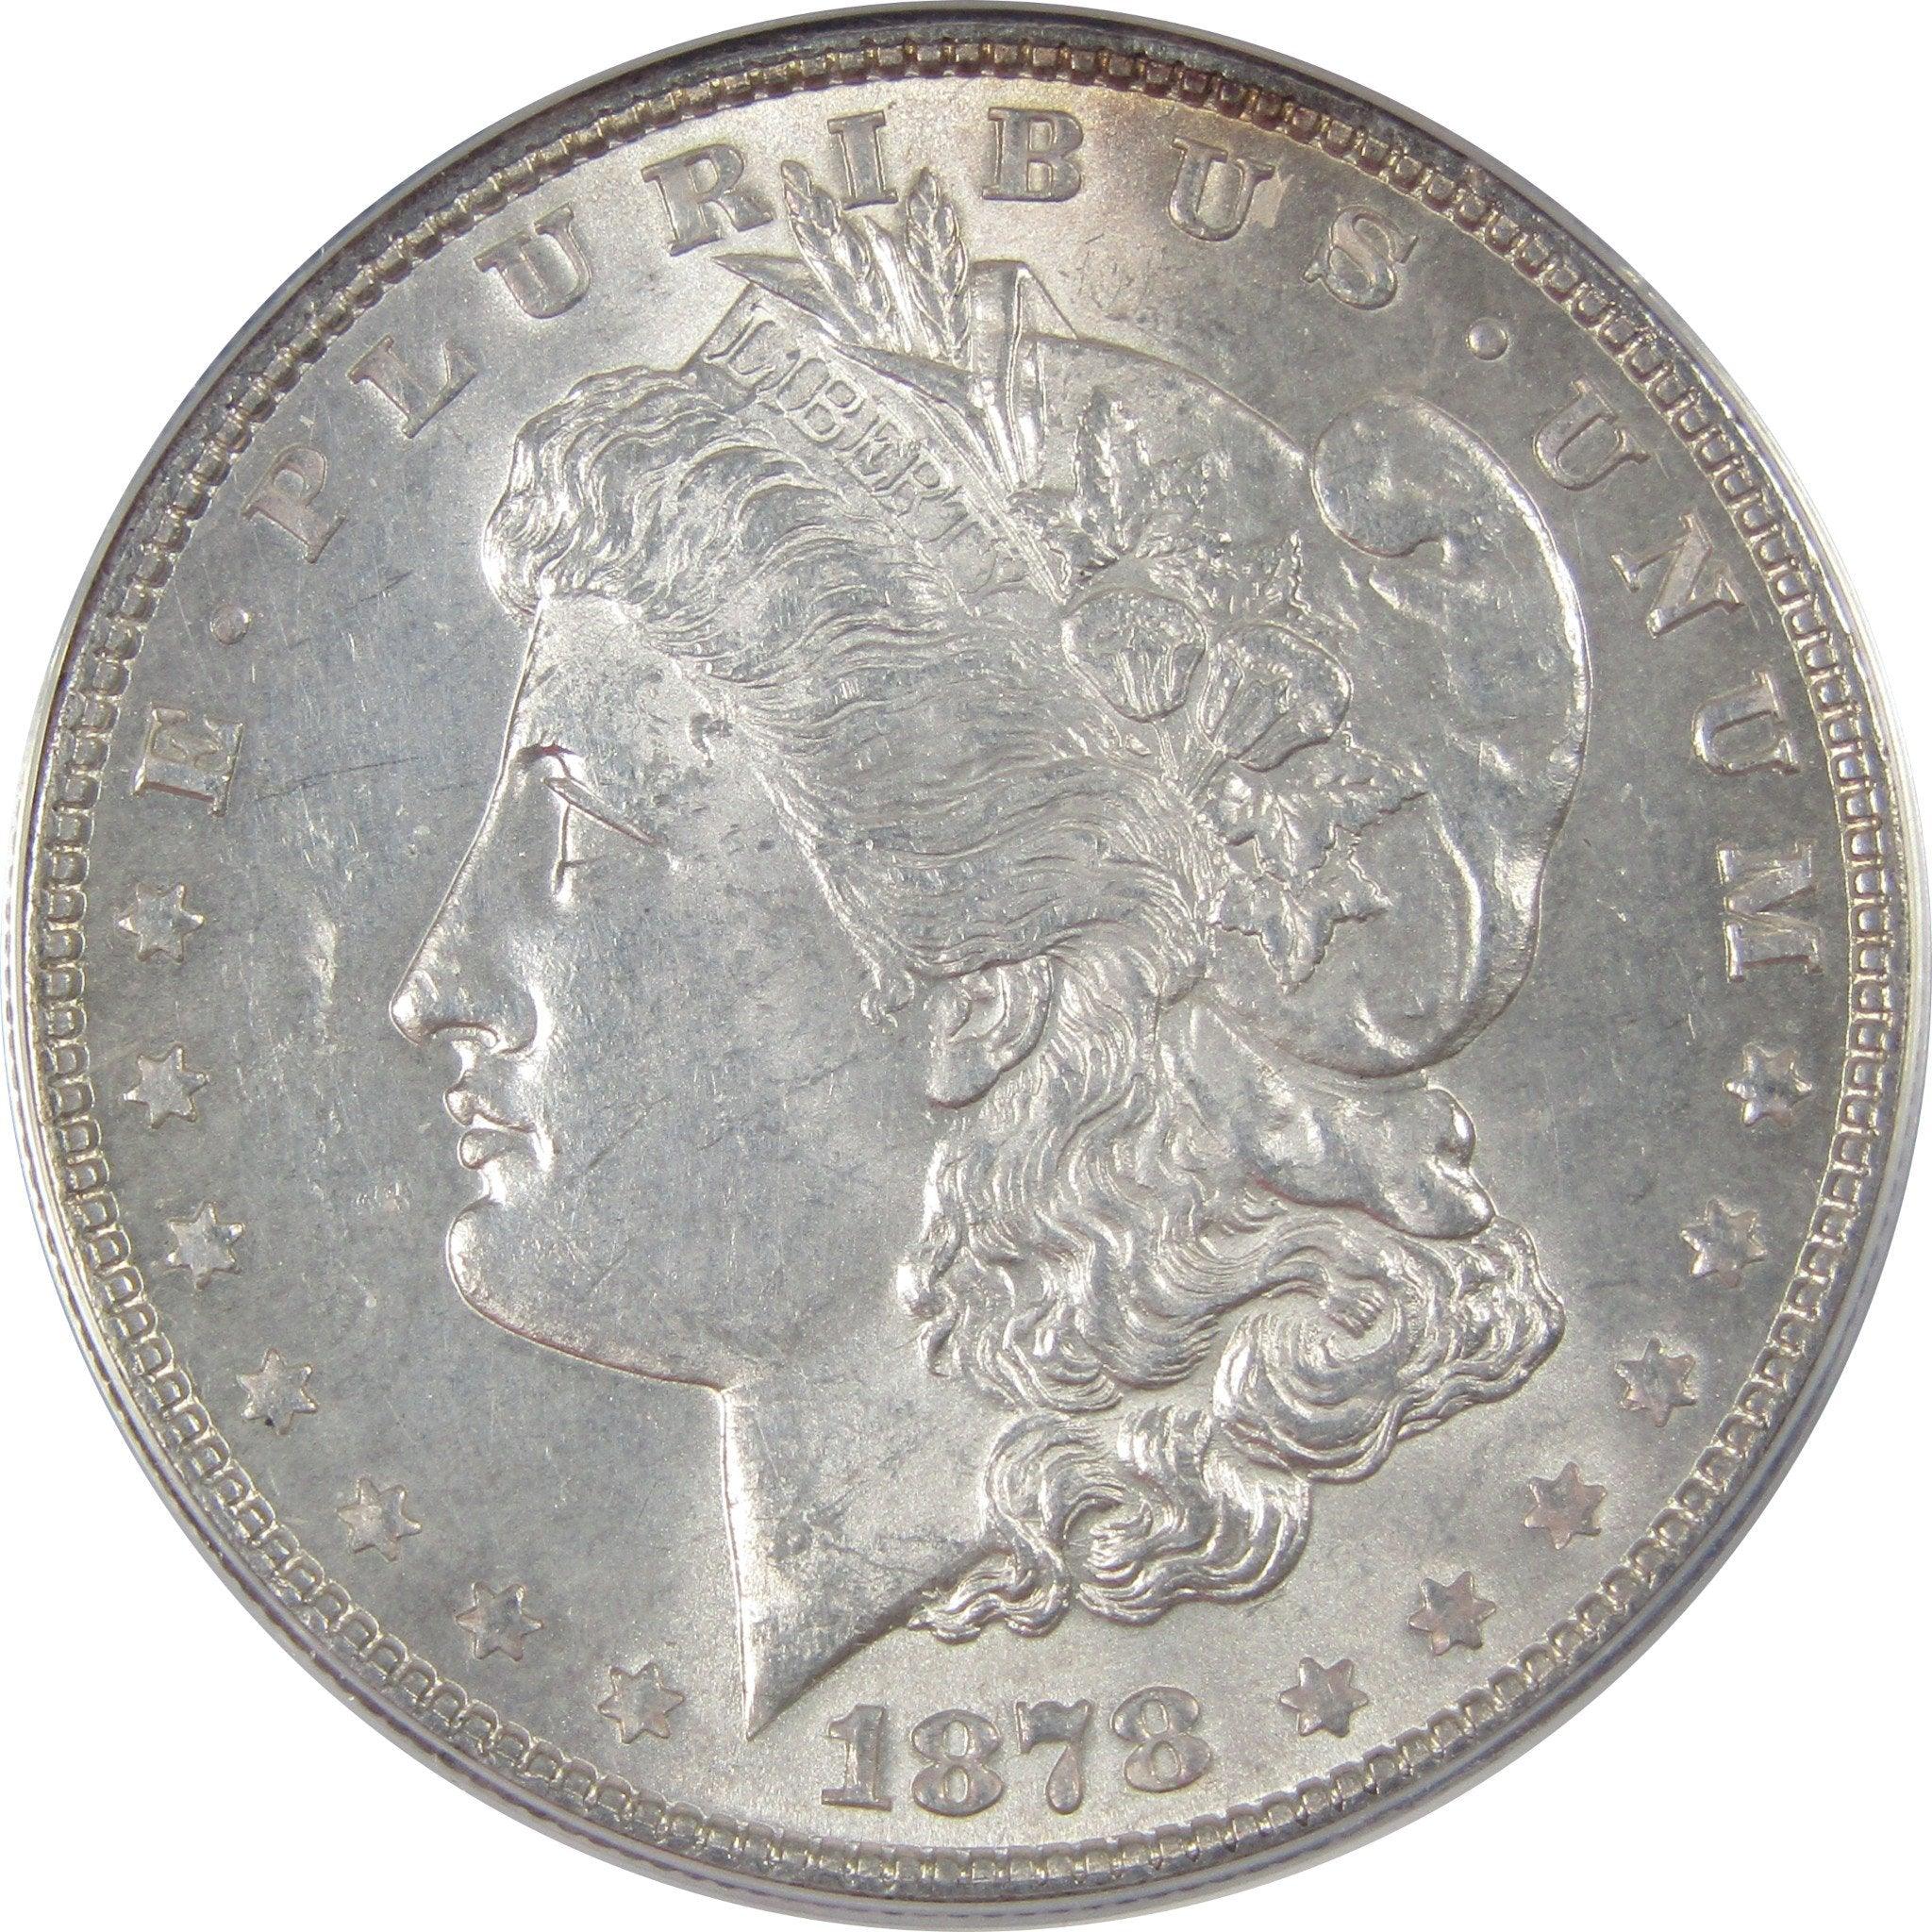 1878 7TF Rev 78 Morgan Dollar MS 61 ANACS Silver SKU:CPC1133 - Morgan coin - Morgan silver dollar - Morgan silver dollar for sale - Profile Coins &amp; Collectibles